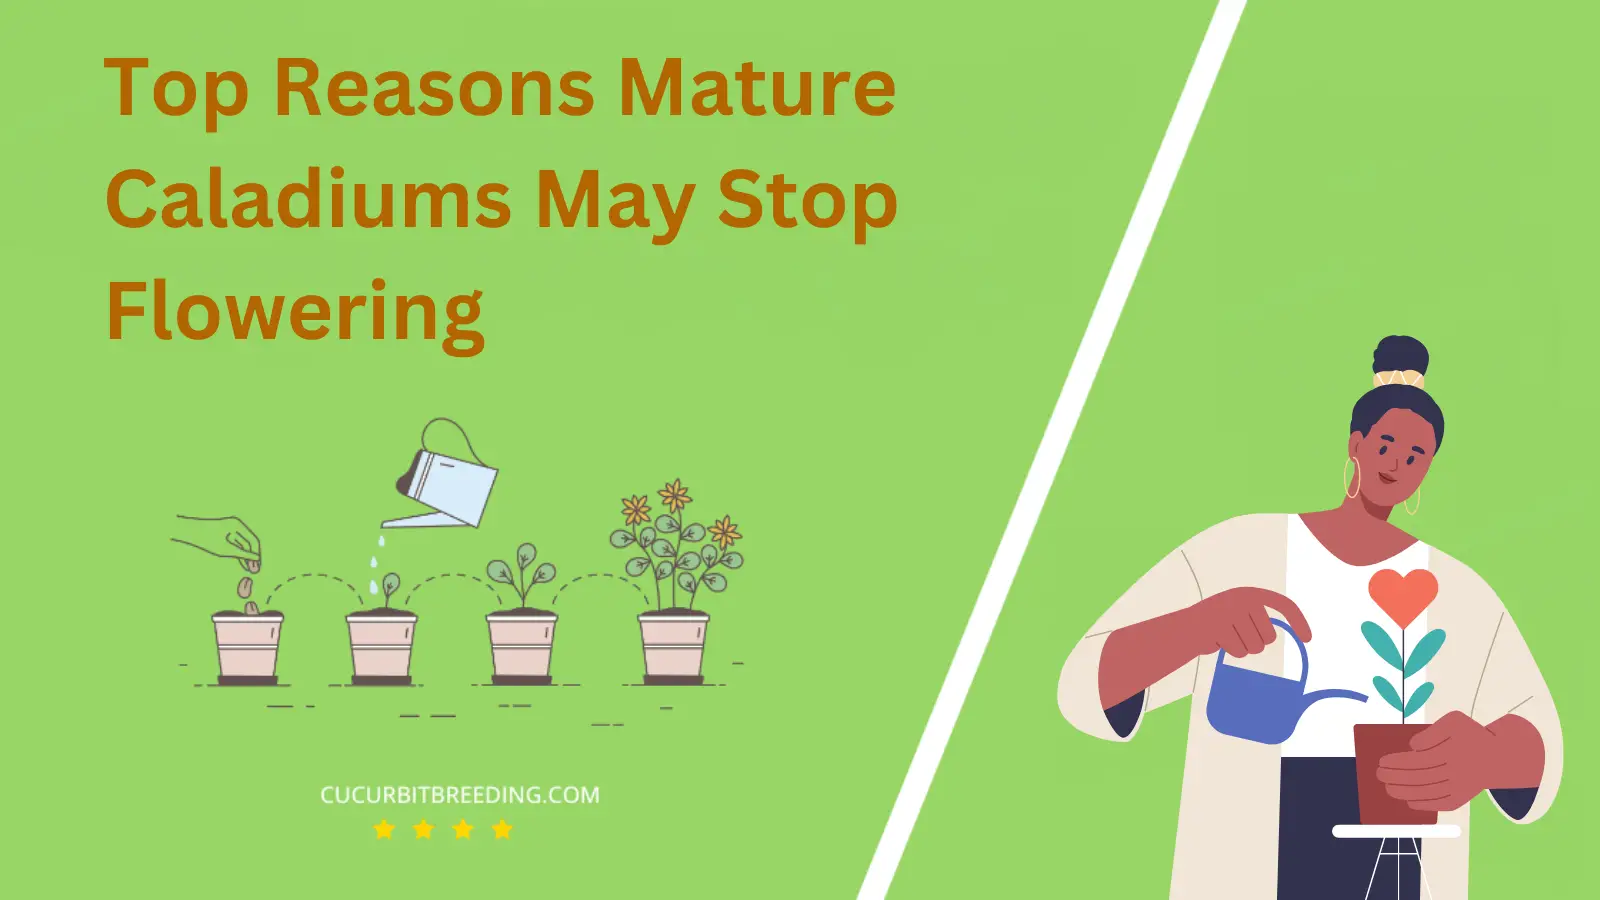 Top Reasons Mature Caladiums May Stop Flowering